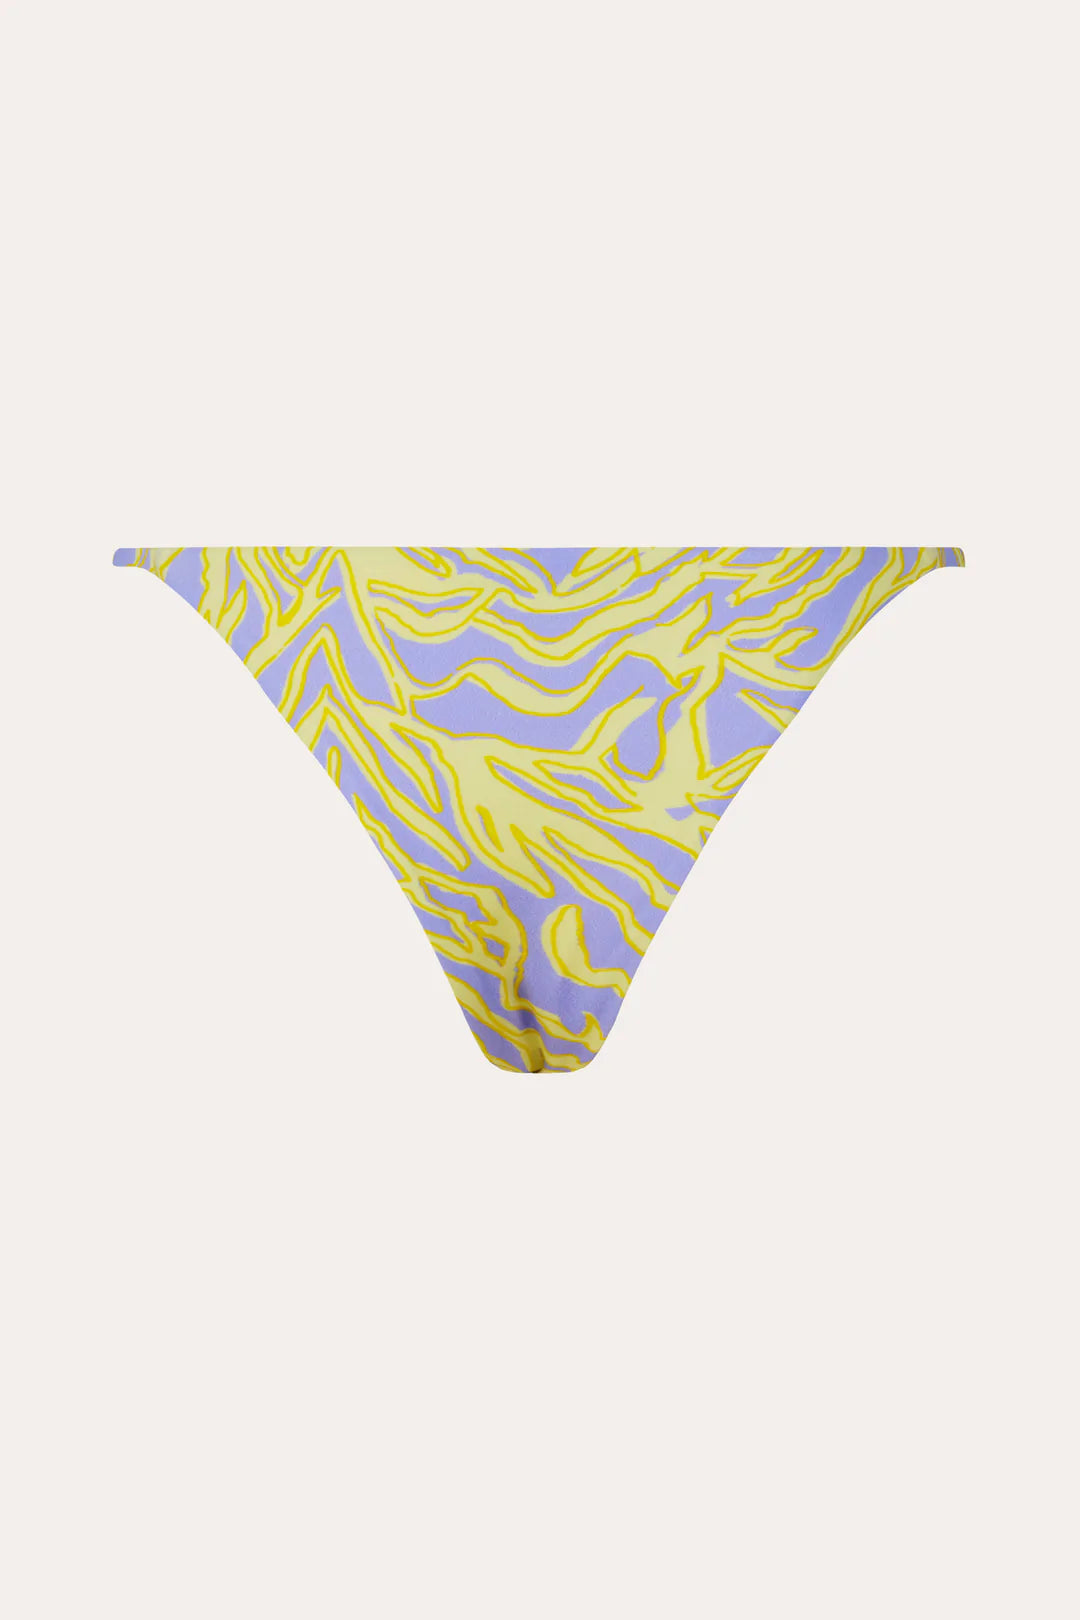 Stine Goya- Lia Bikini Bottom: Lilac/ Yellow